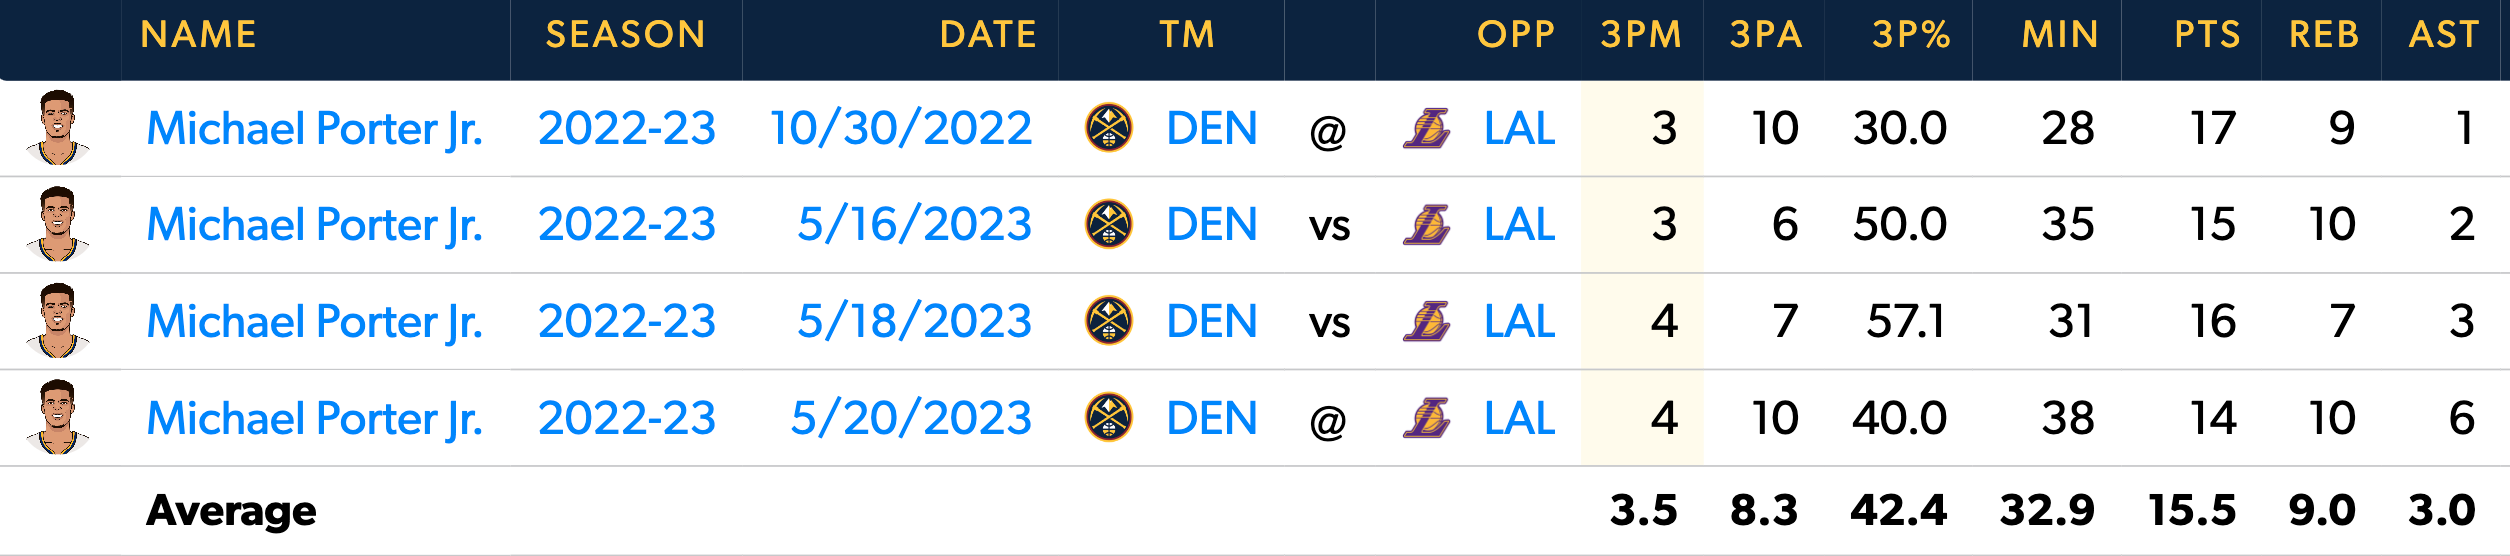 MPJ's games vs. Los Angeles when seeing 28+ MIN this season.